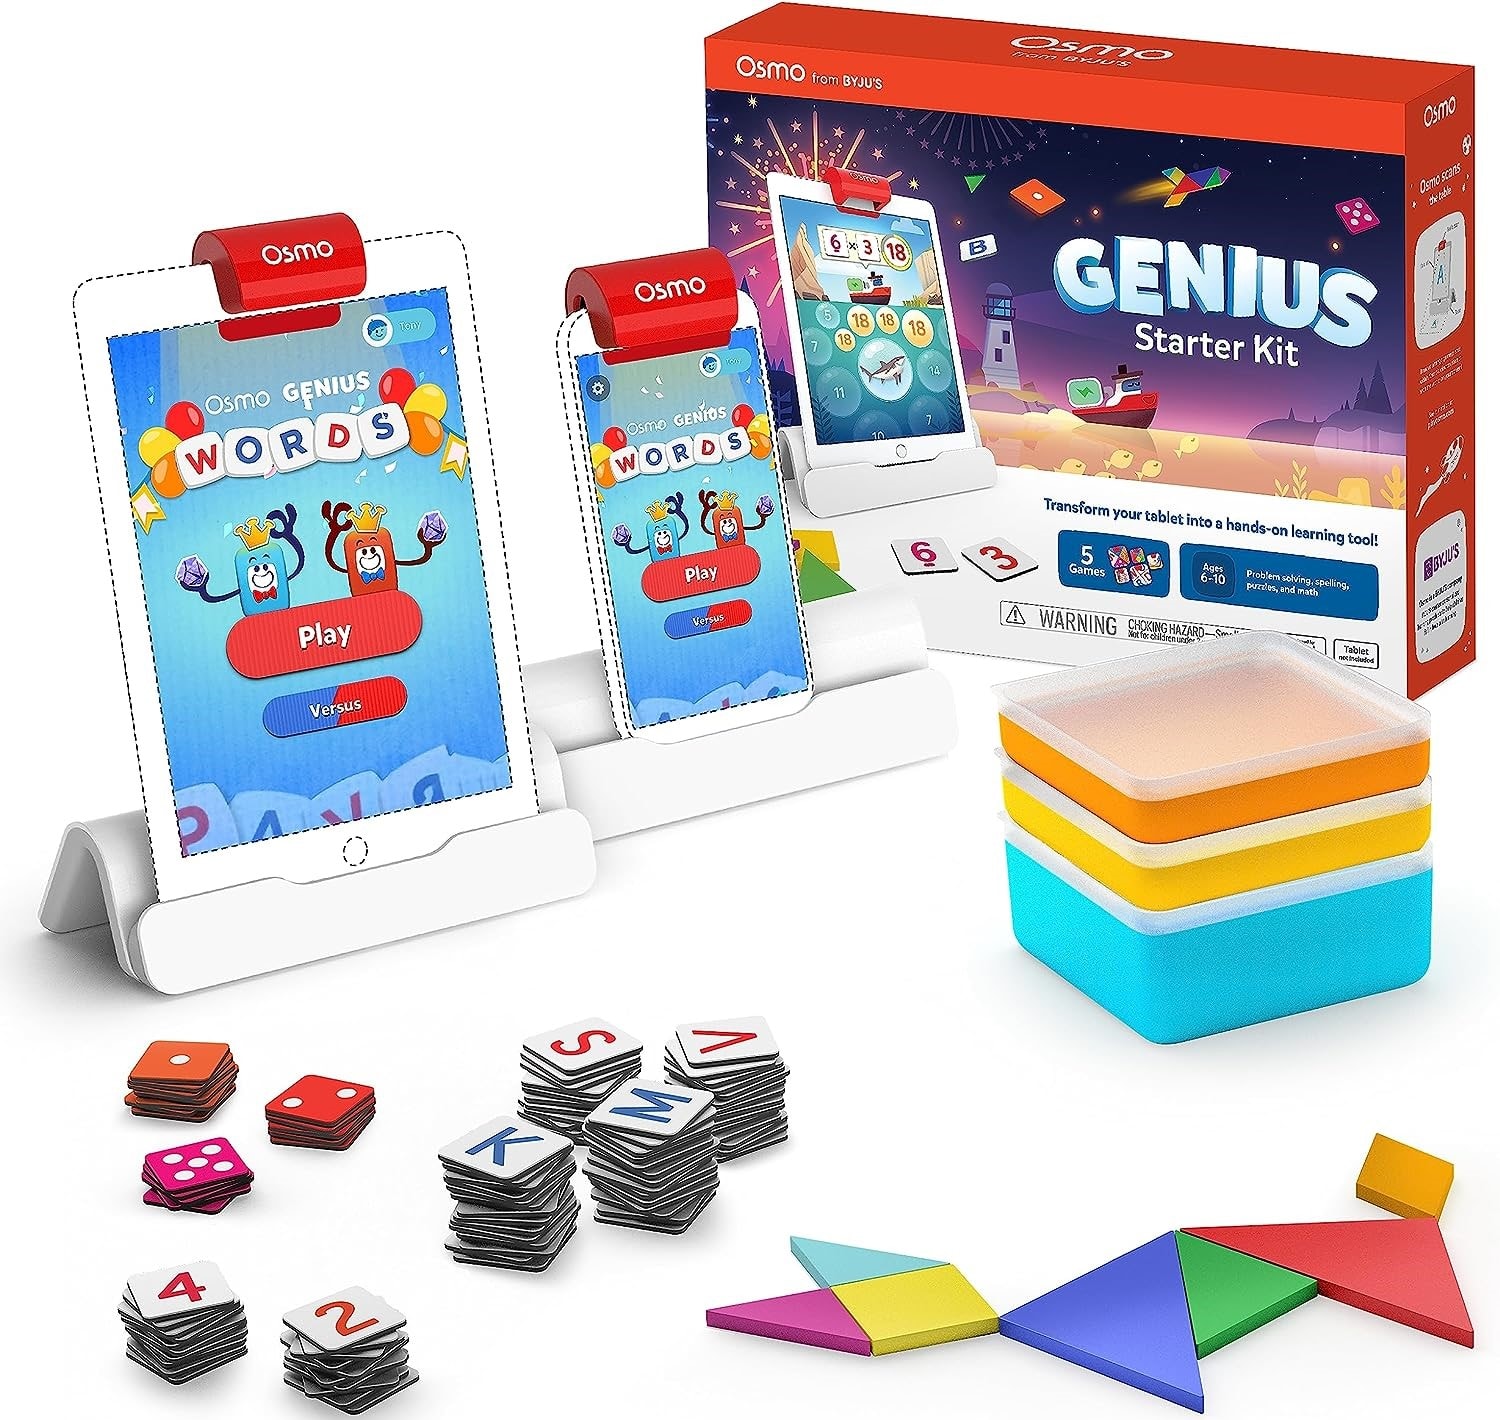 The Osmo Genius Starter Kit for iPad